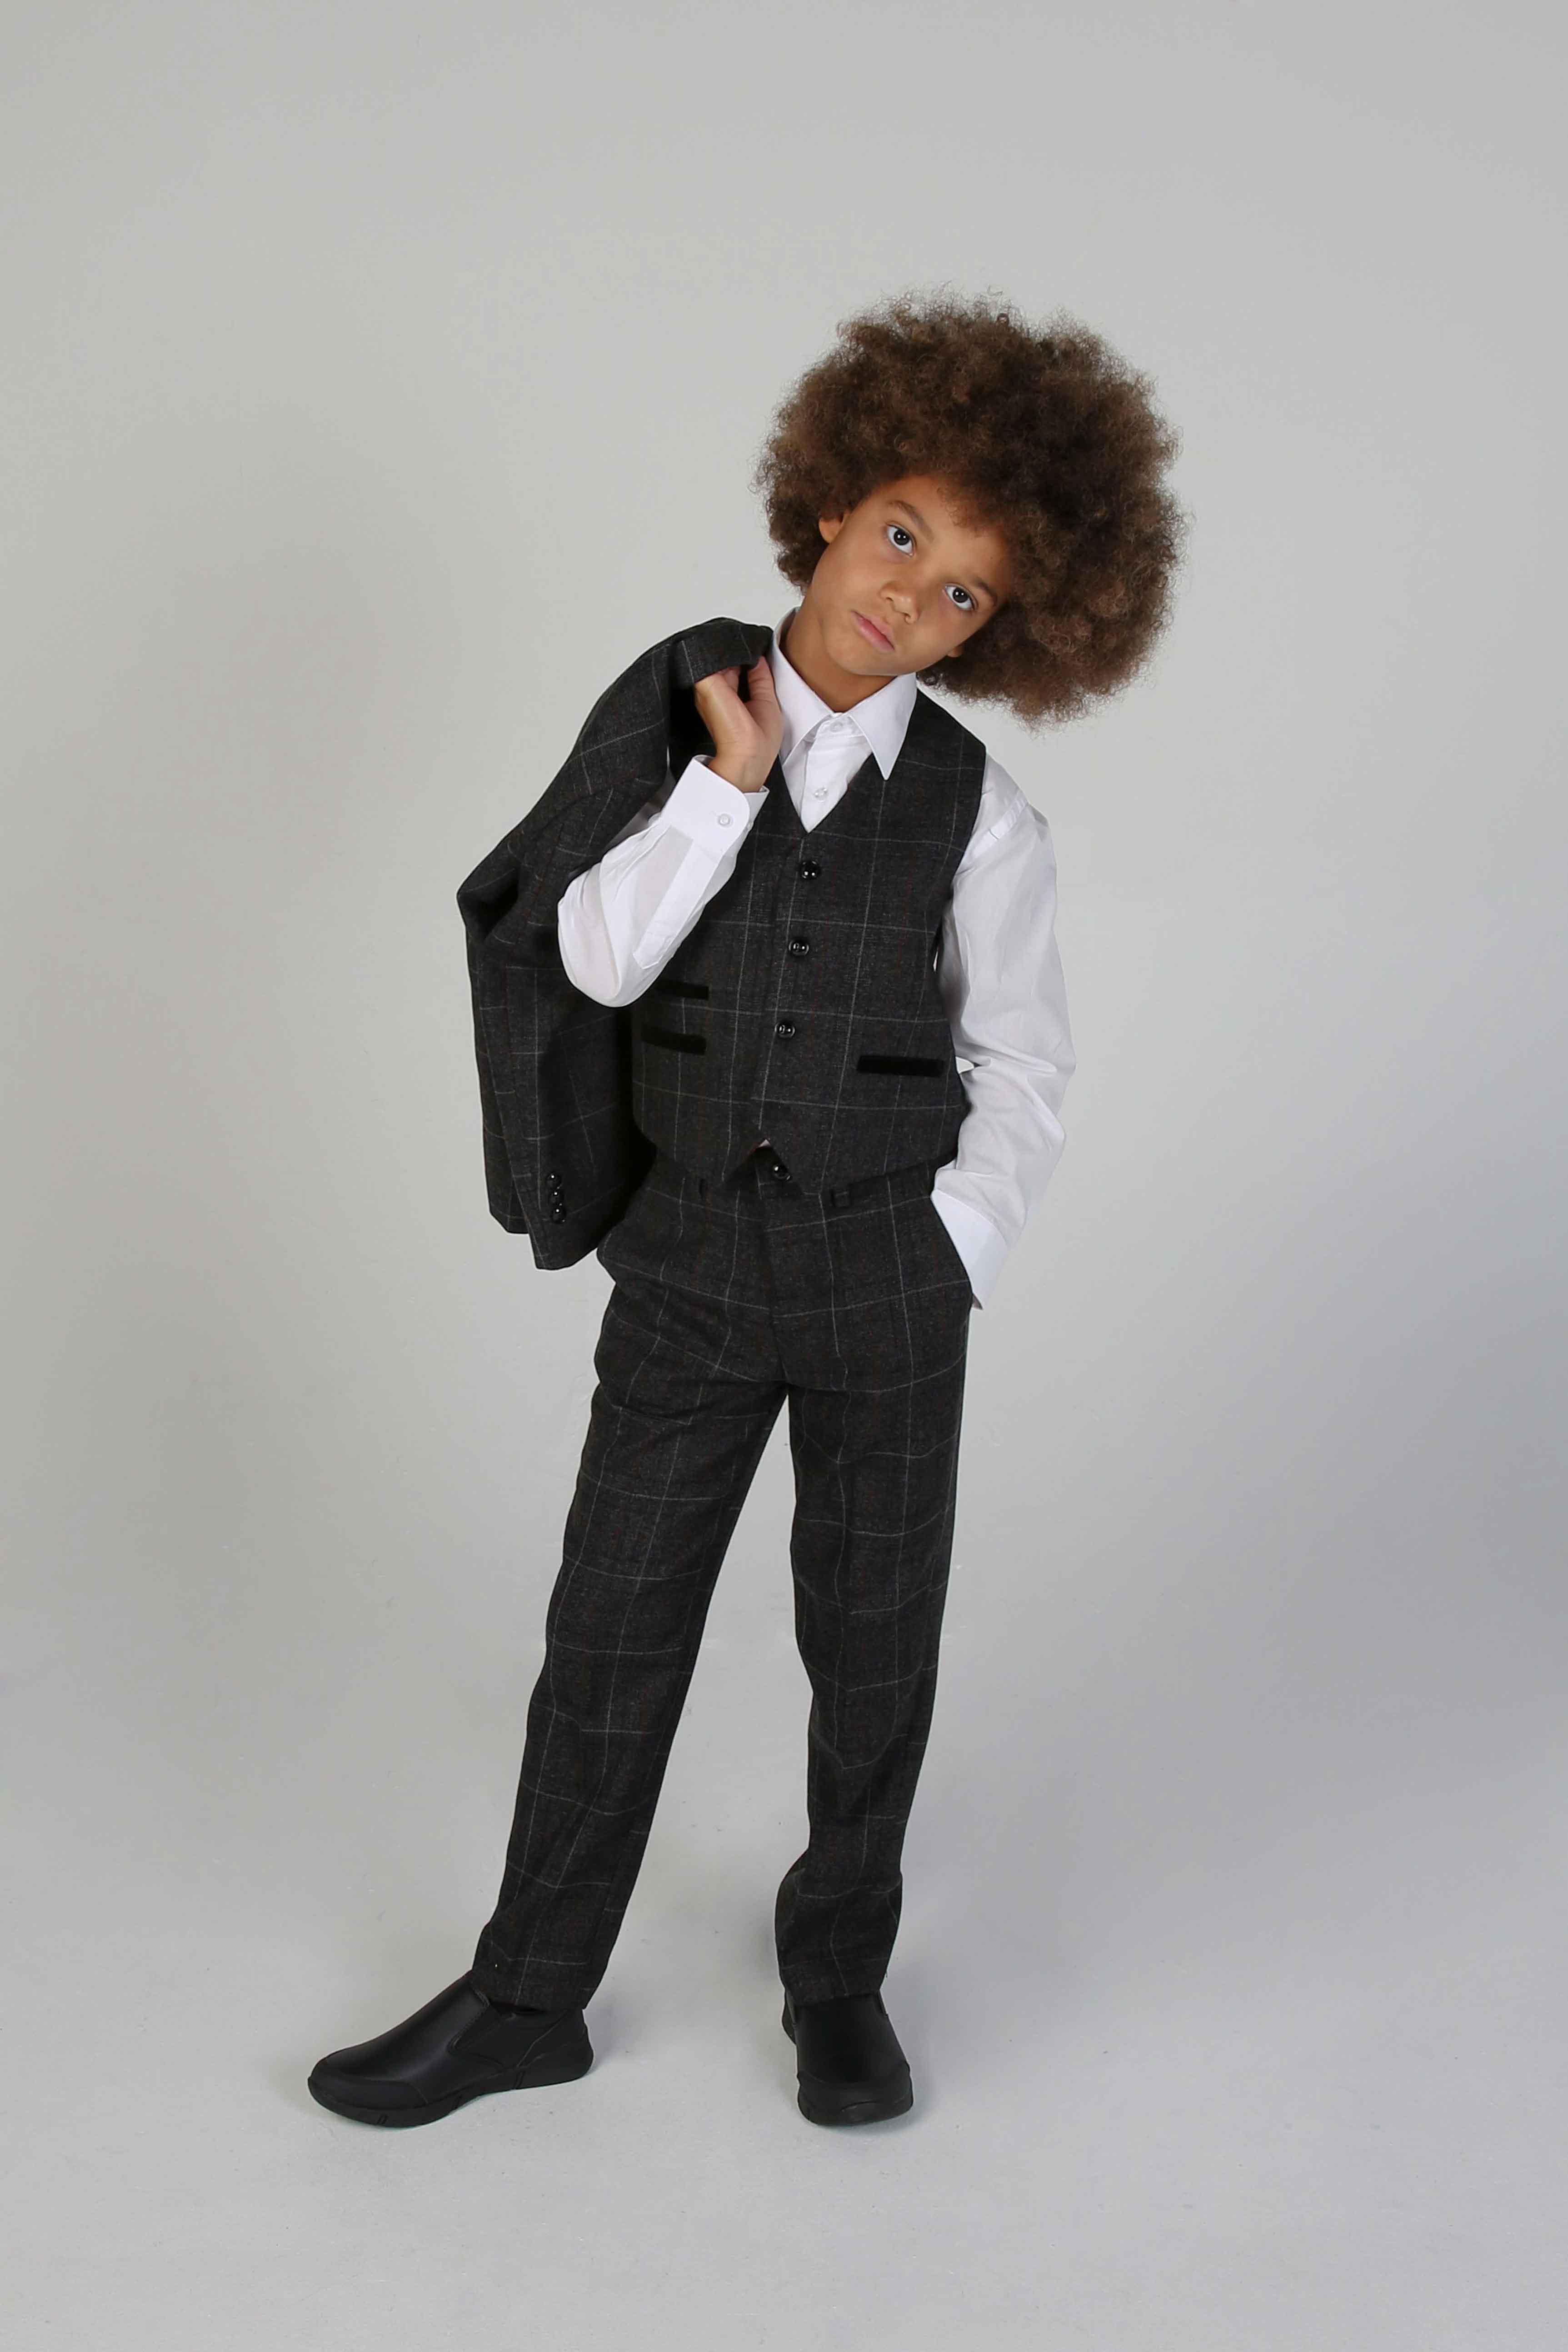 Paul Andrew Children - Device - Boy's Harvey Grey Three Piece Suit